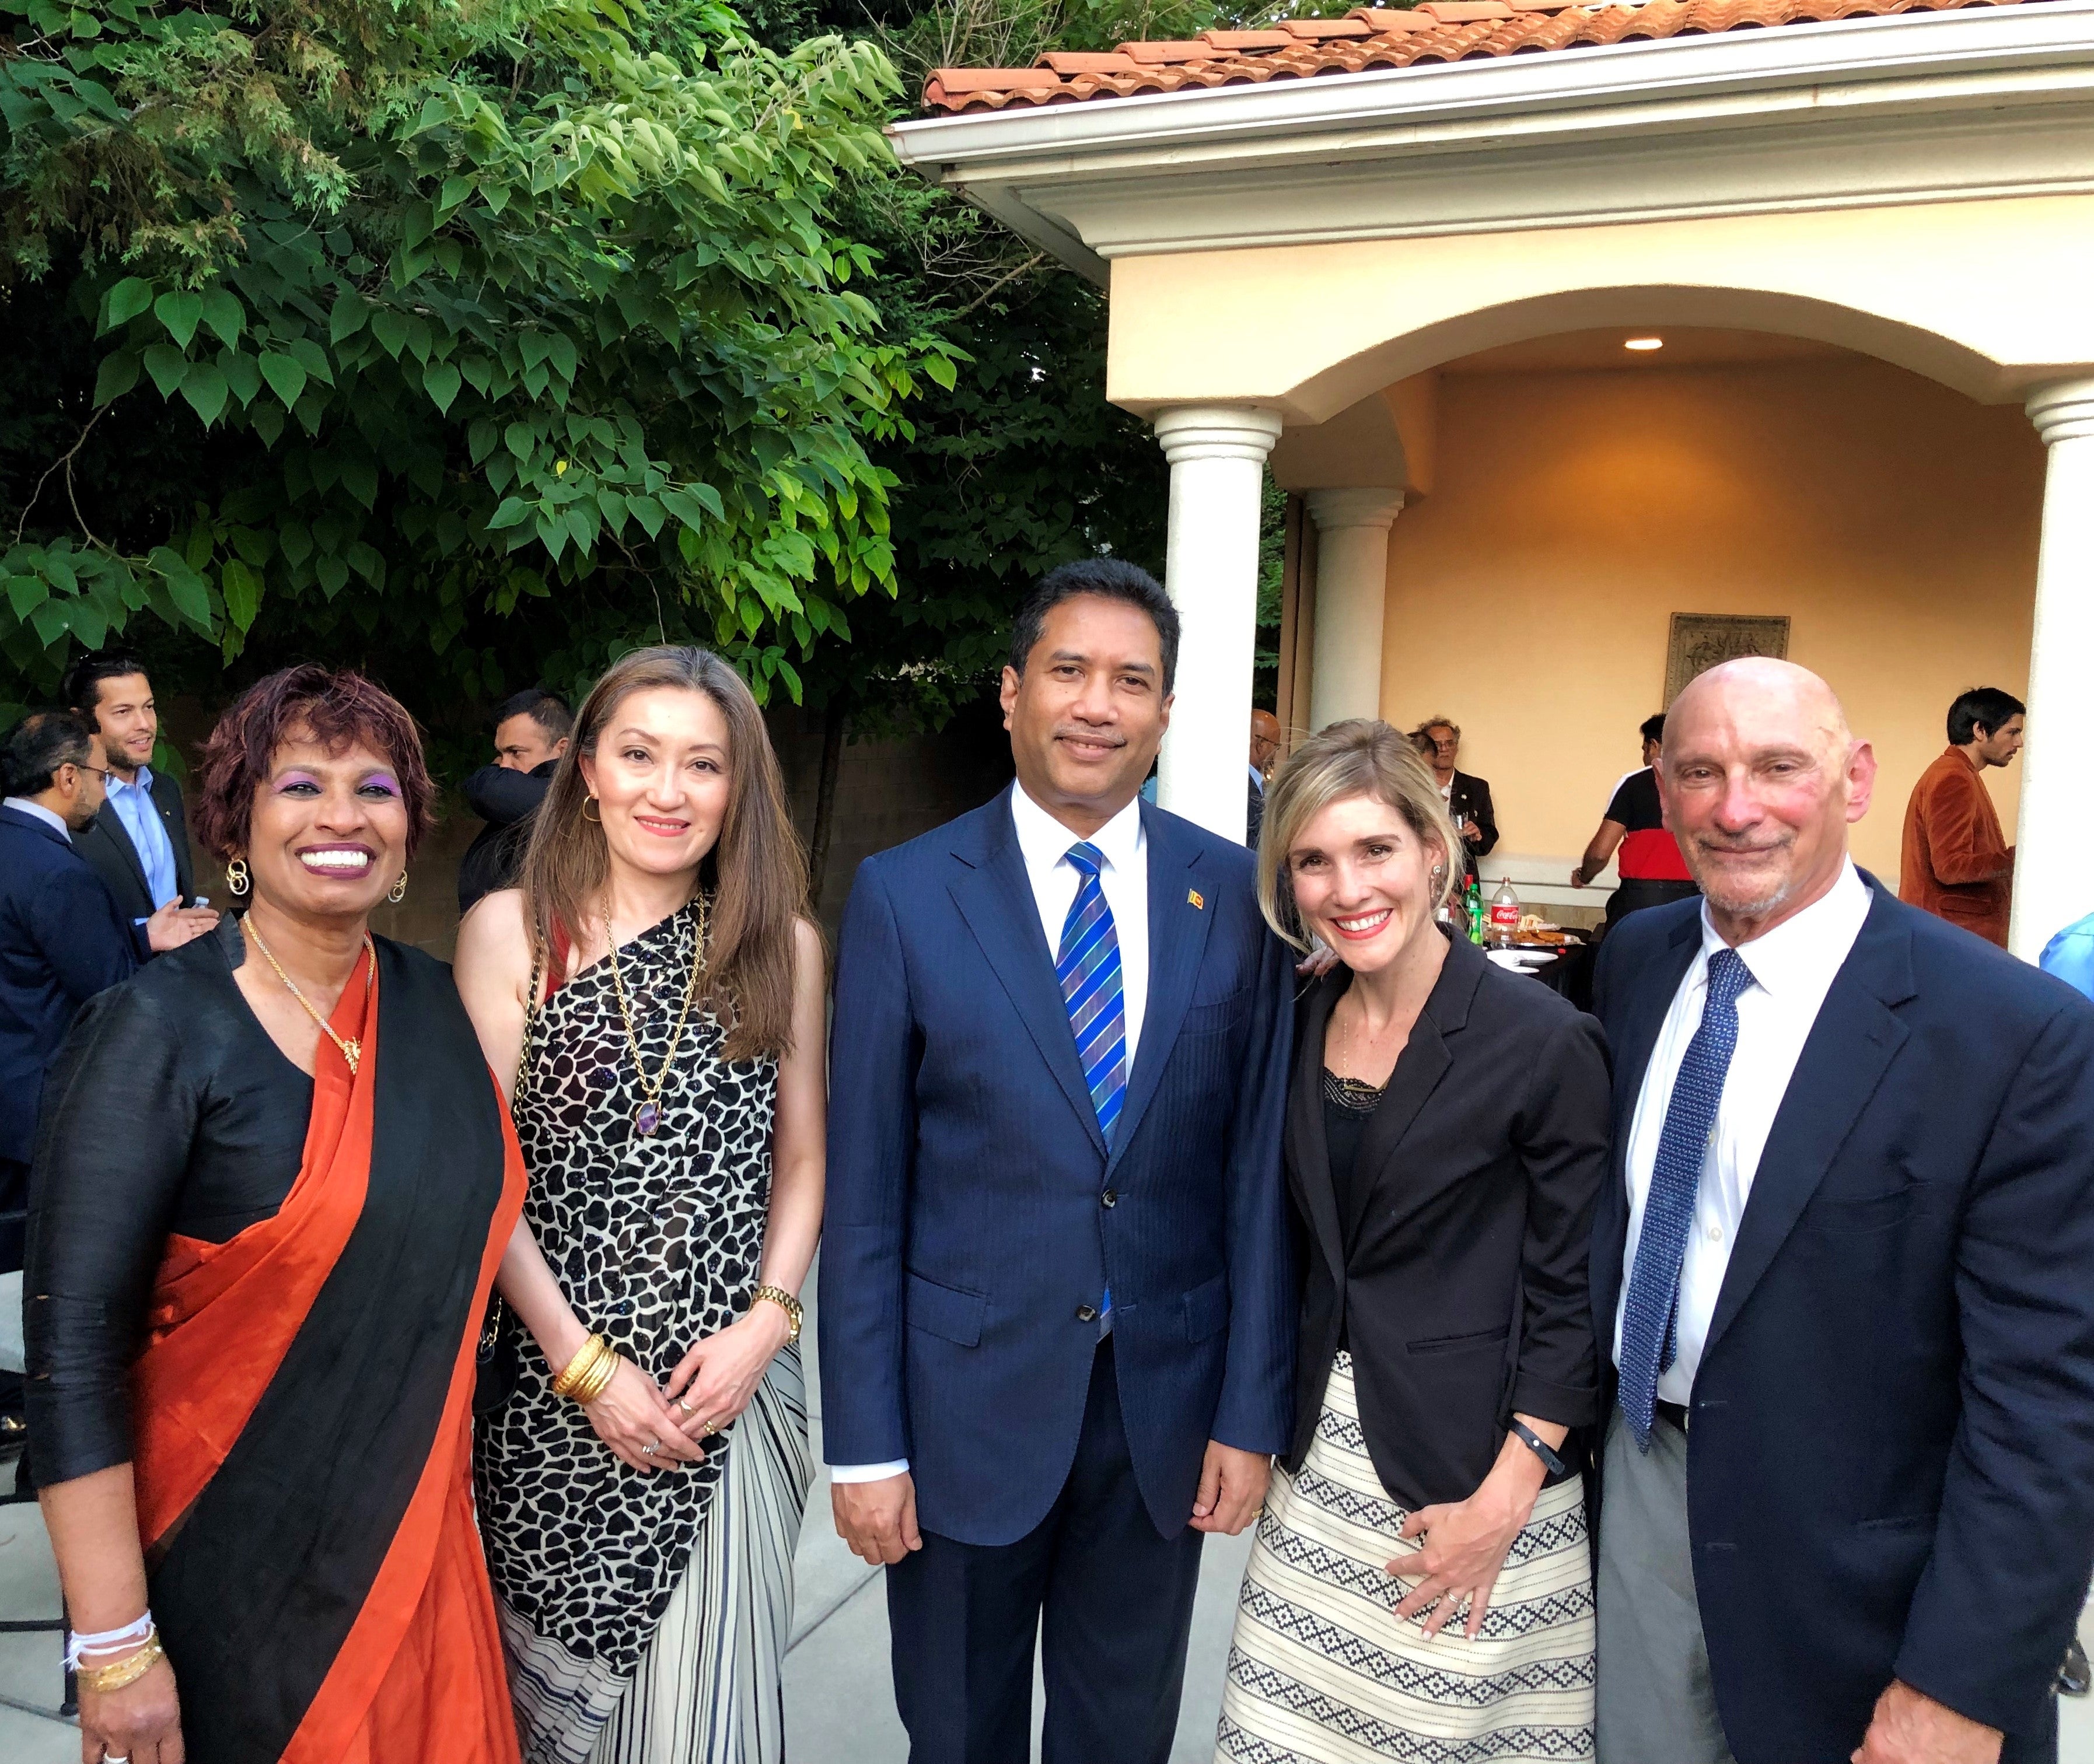 2019-07-23 Sir Lanka Ambassador dinner pic 1 of 2